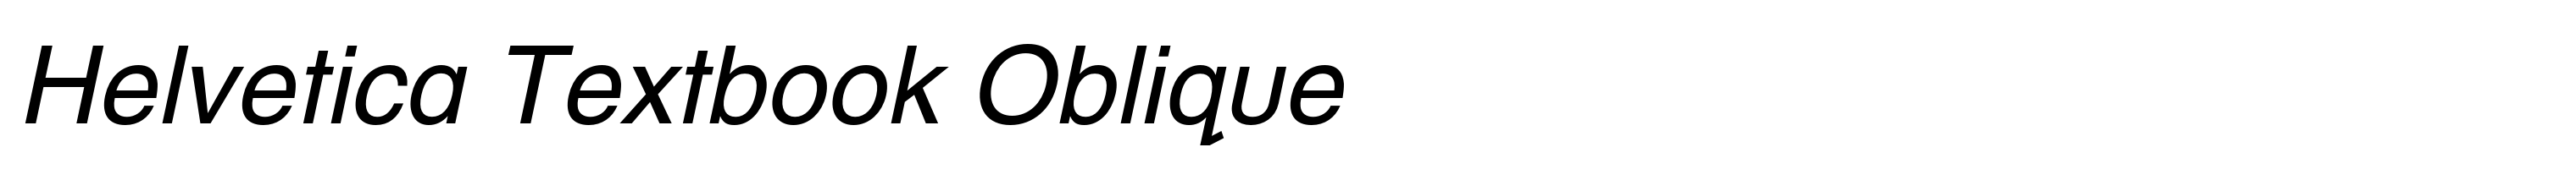 Helvetica Textbook Oblique